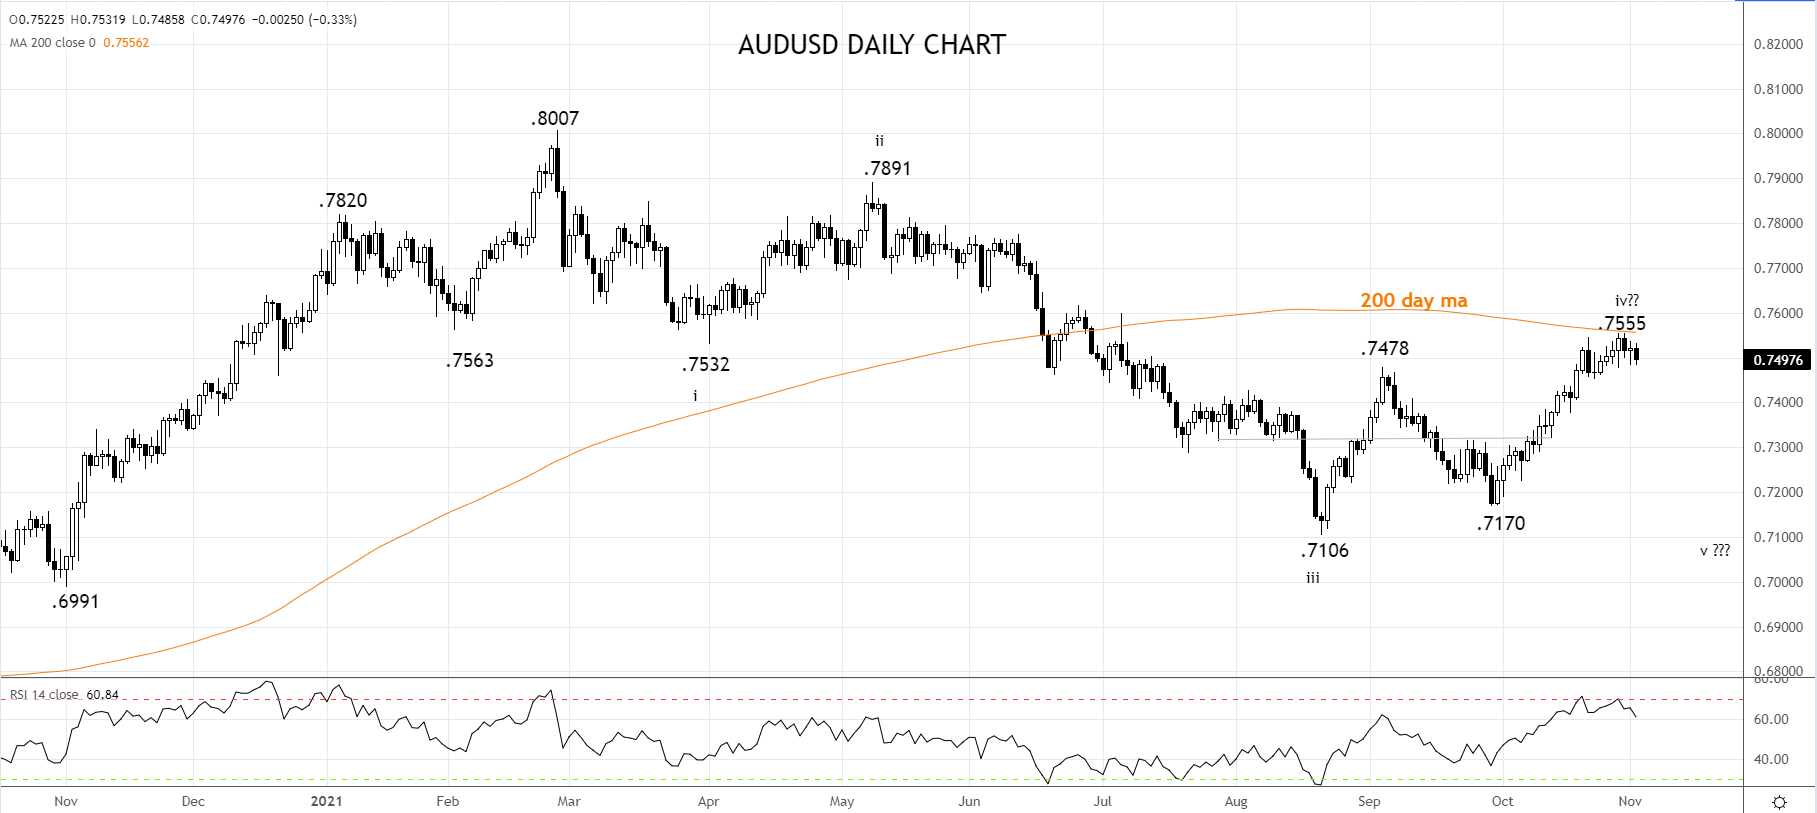 AUDUSD daily chart 2nd of November